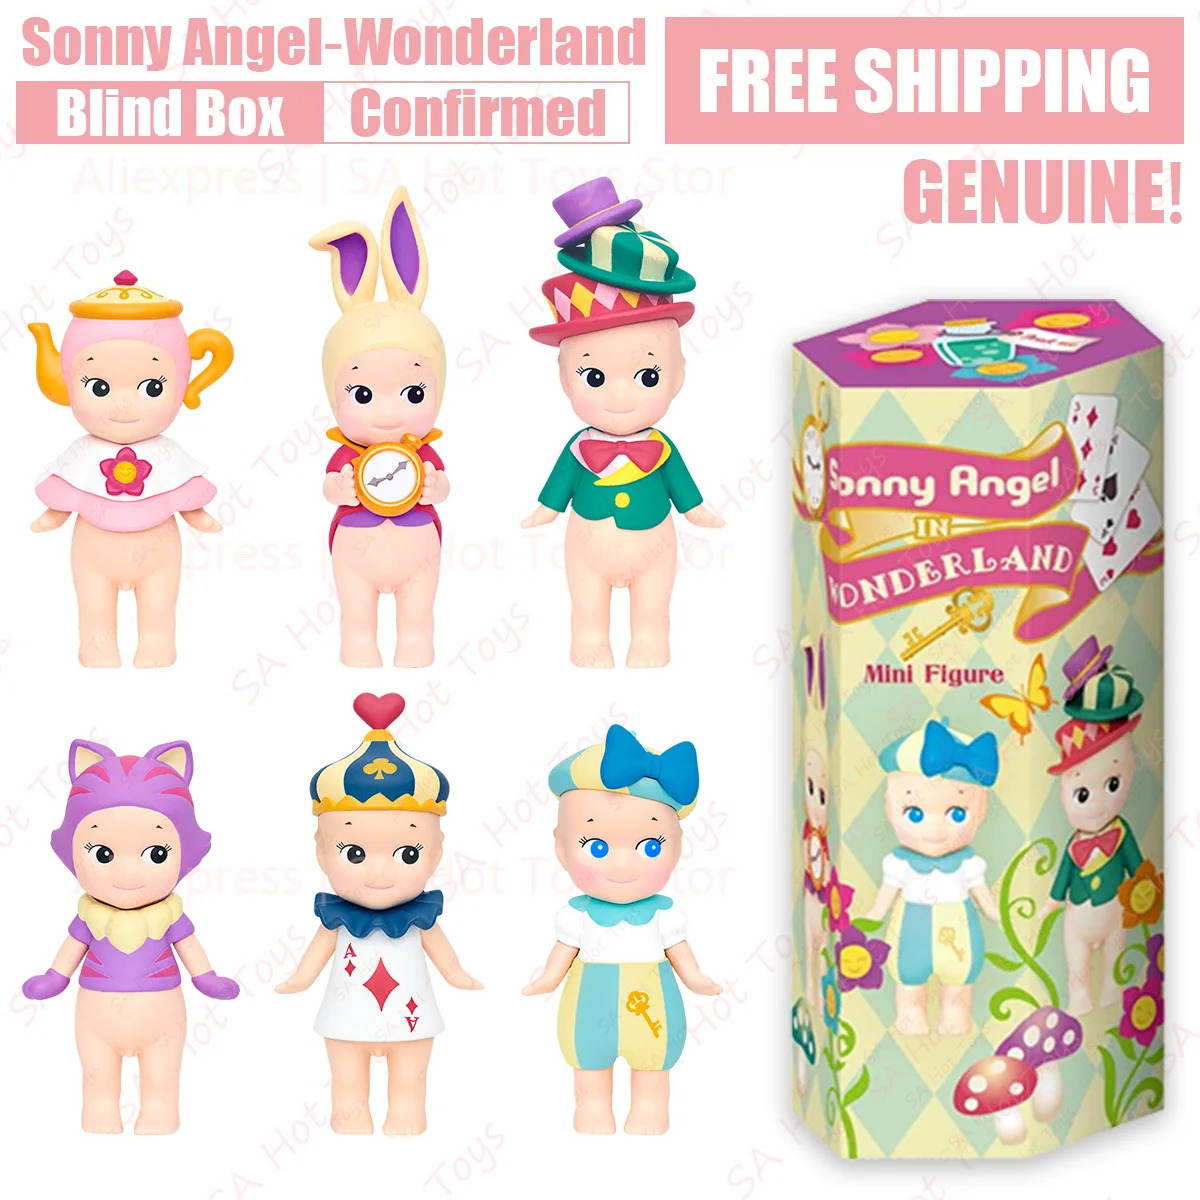 Sonny Angel Wonderland Blind Box Confirmed style Genuine Cute Doll telep... - $22.99+